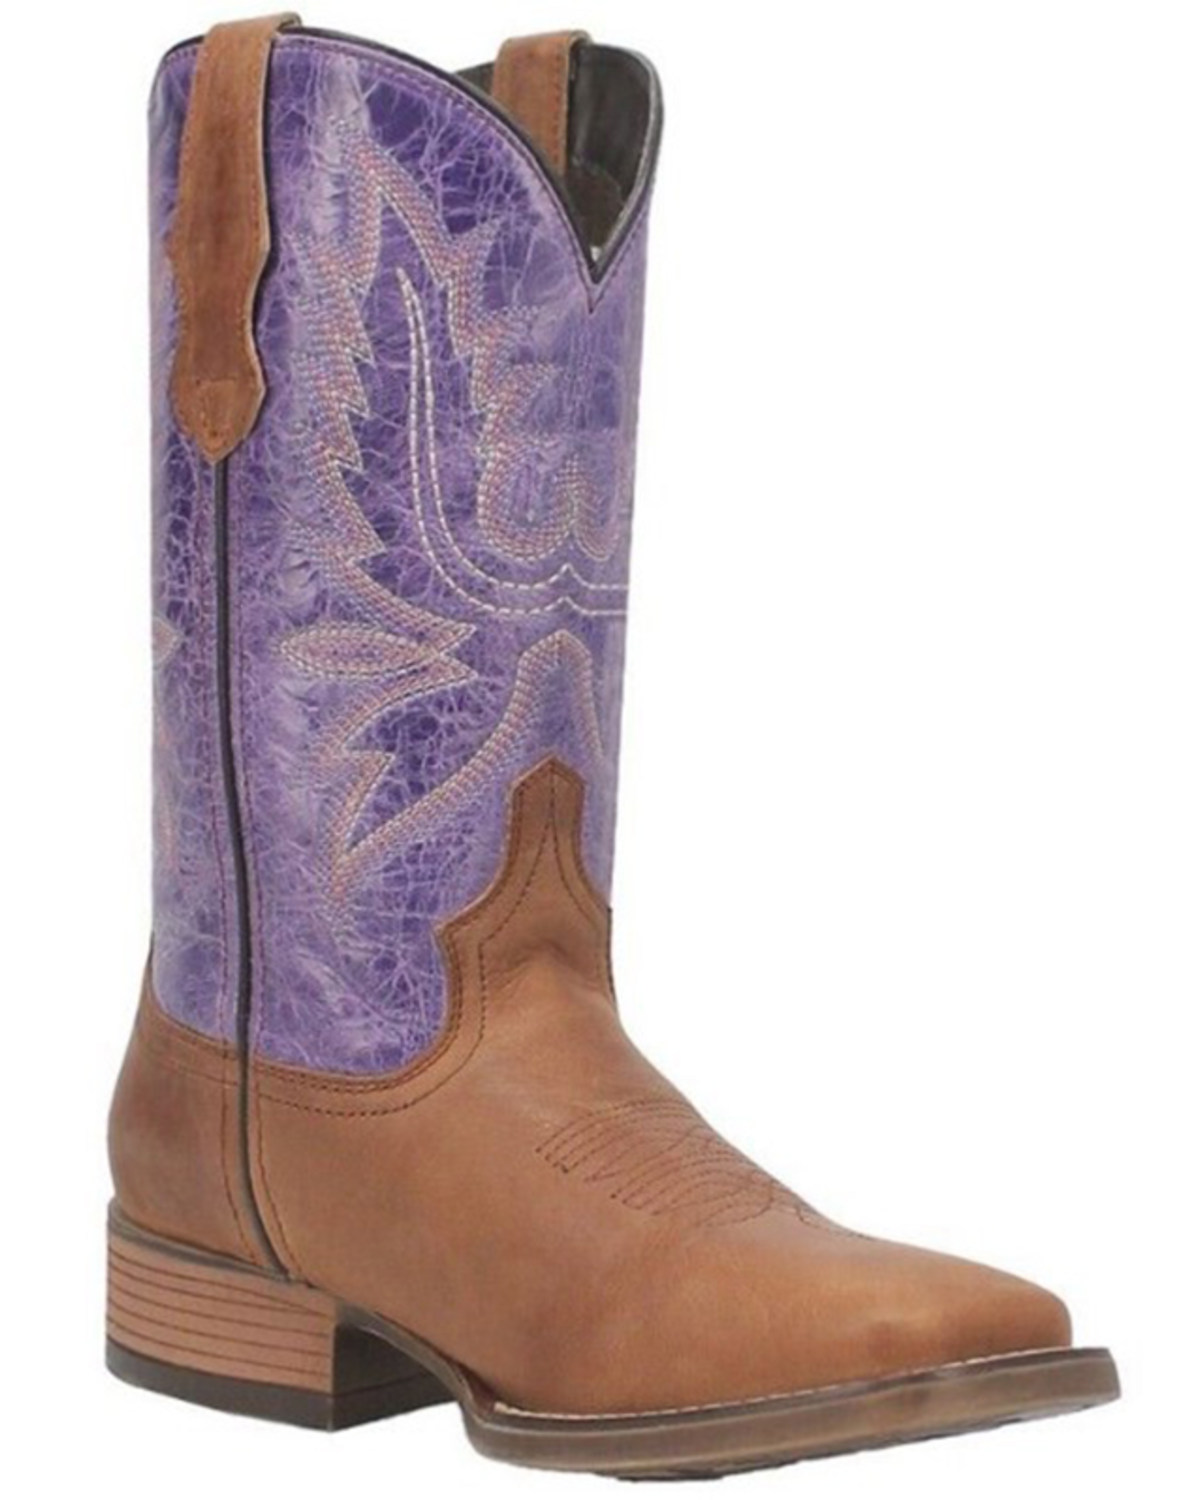 Laredo Women's 11" Western Boots - Broad Square Toe